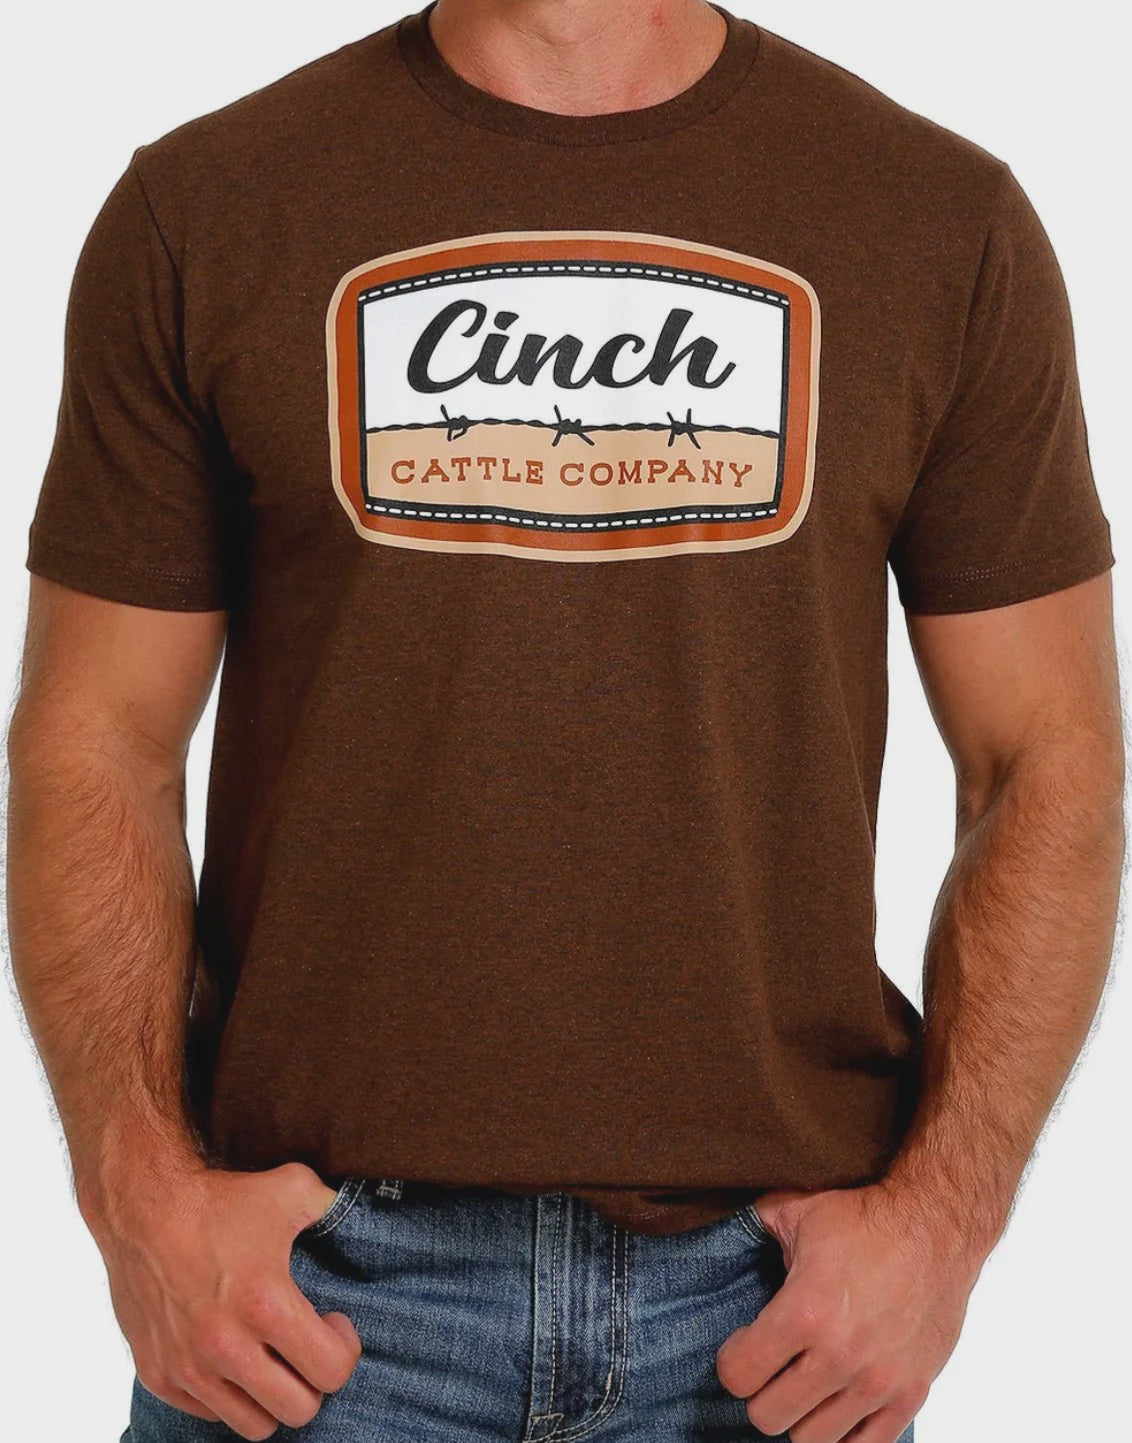 Mens Cinch Cattle Company Logo Tee Tshirt - Brown (6924211814477)